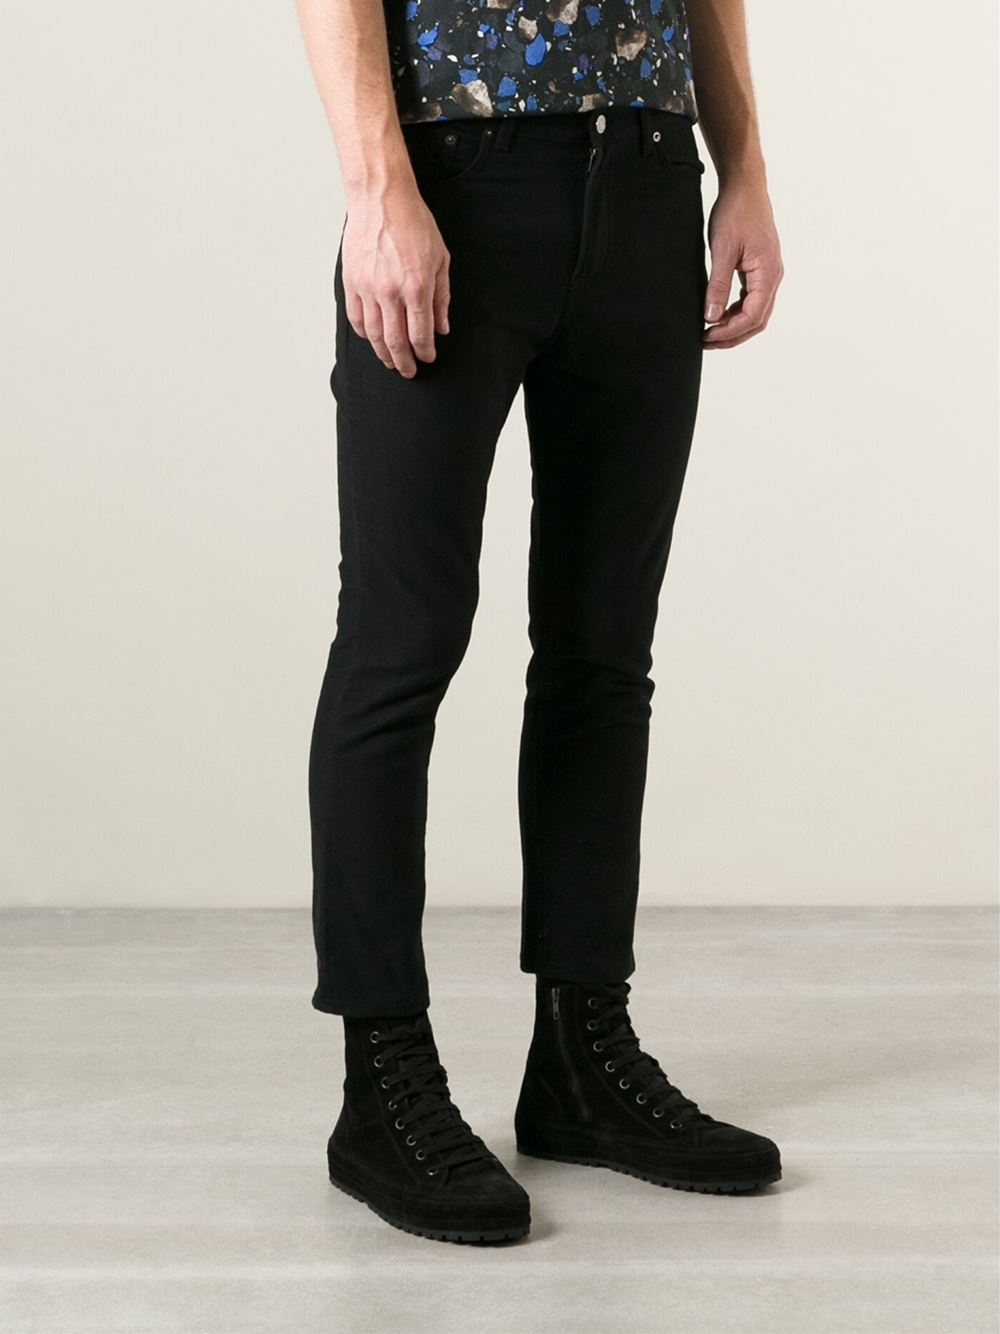 Acne Studios River Moleskin Trousers in Black for Men - Lyst